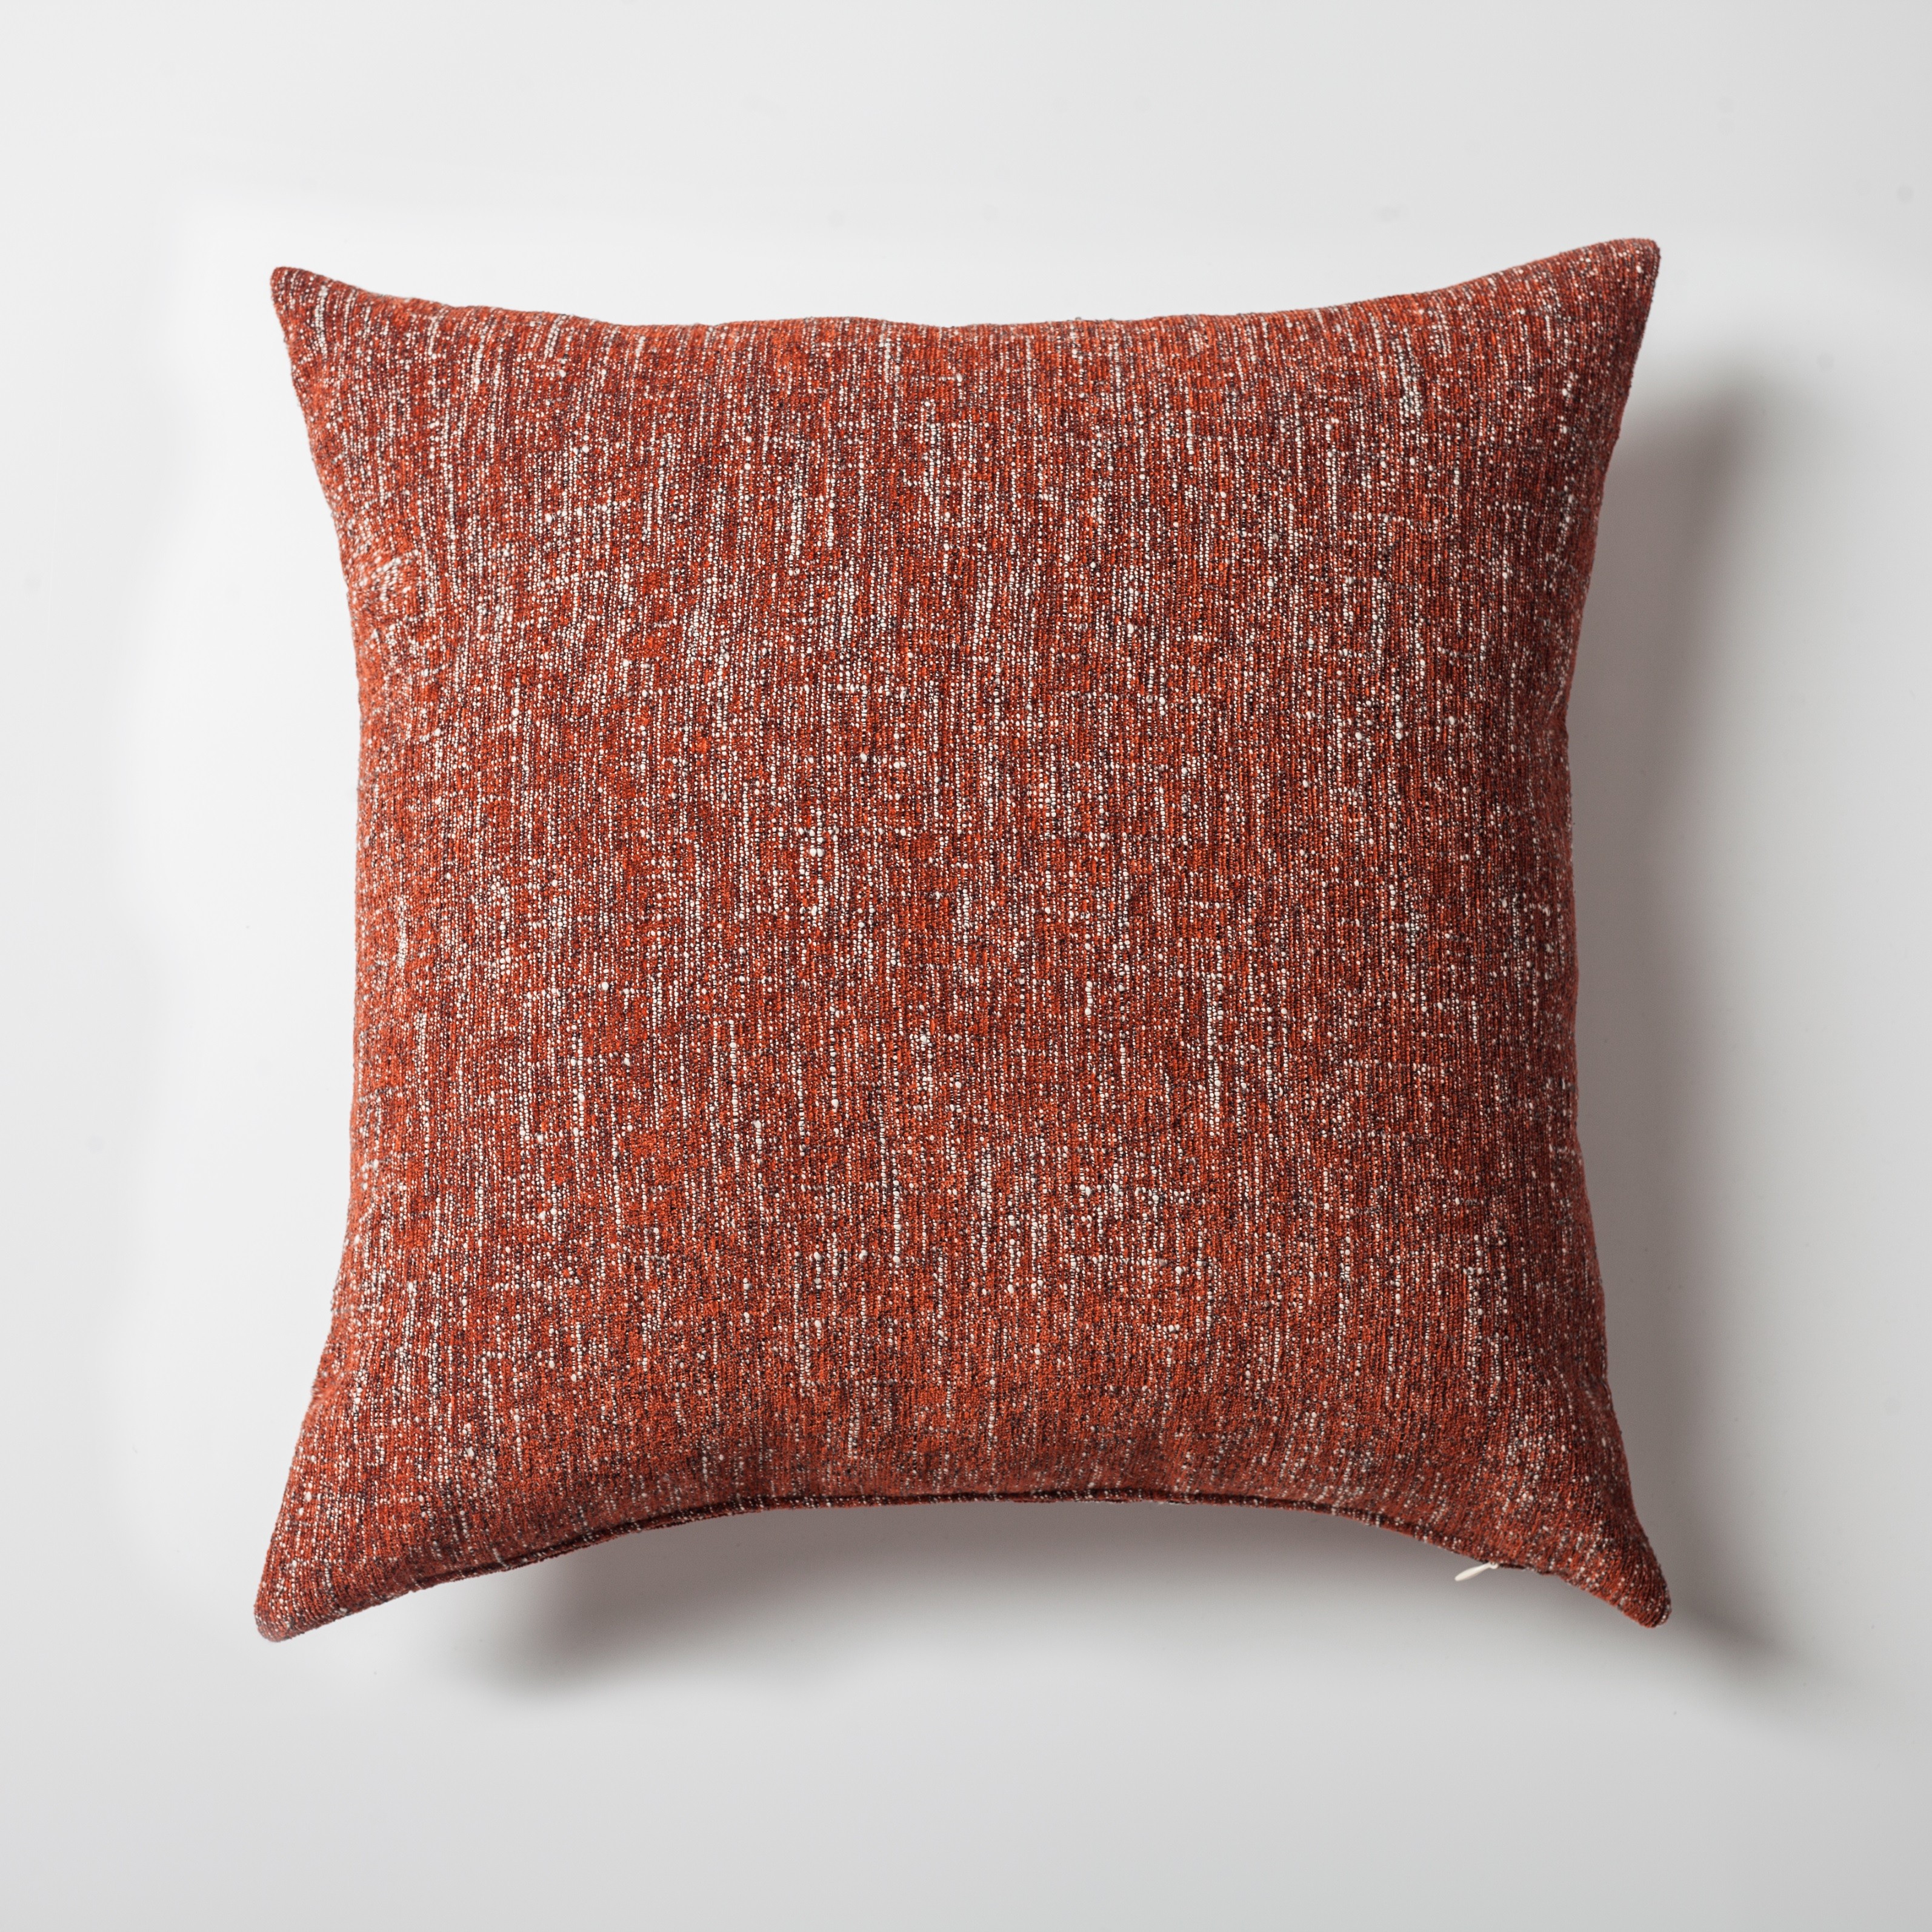 "Flap" - Textured Linen Pillow 20x20 Inch - Terracotta (Cover Only)